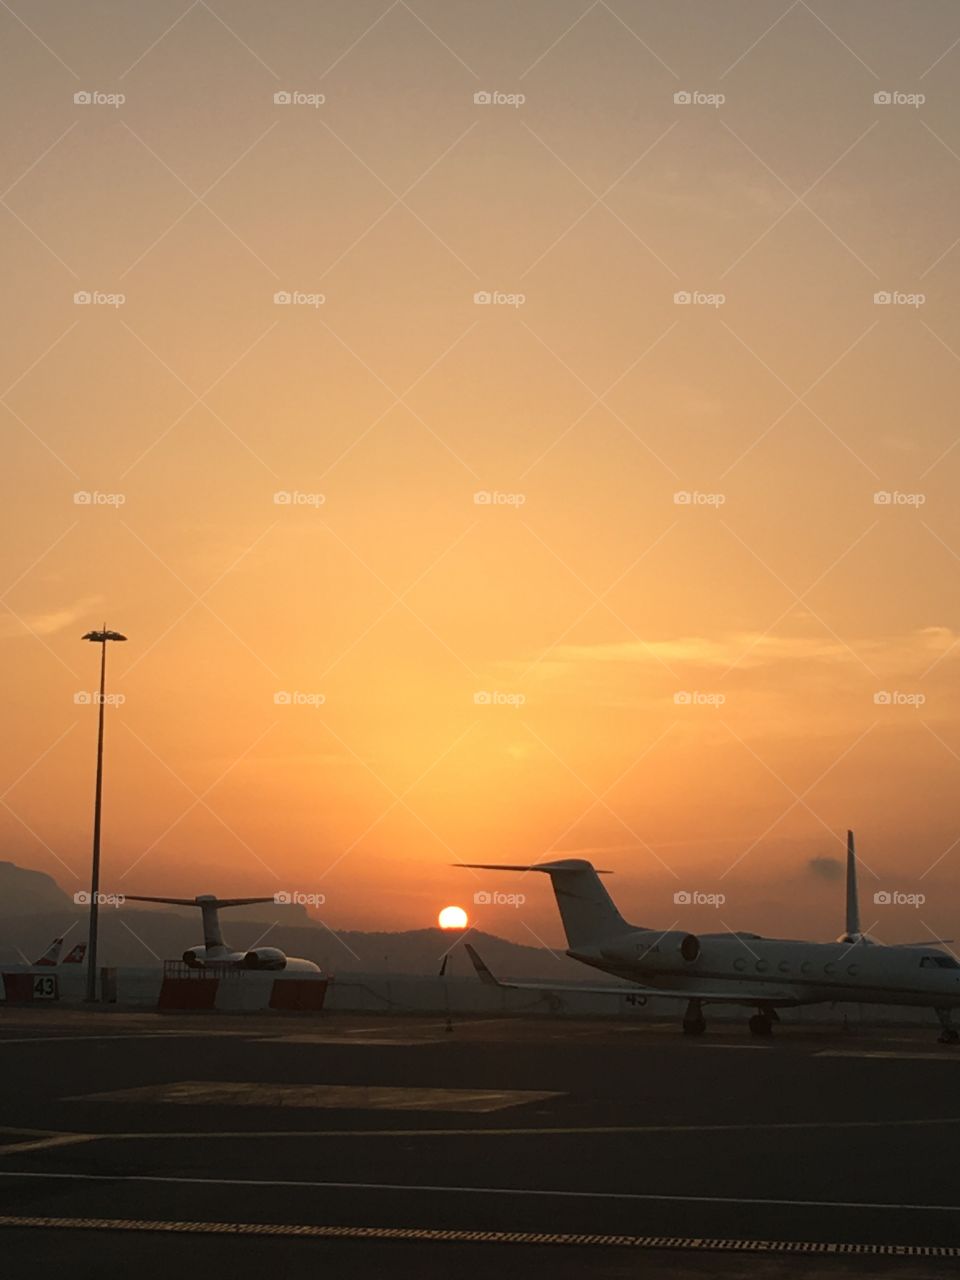 Orangy Sunrise at the airport